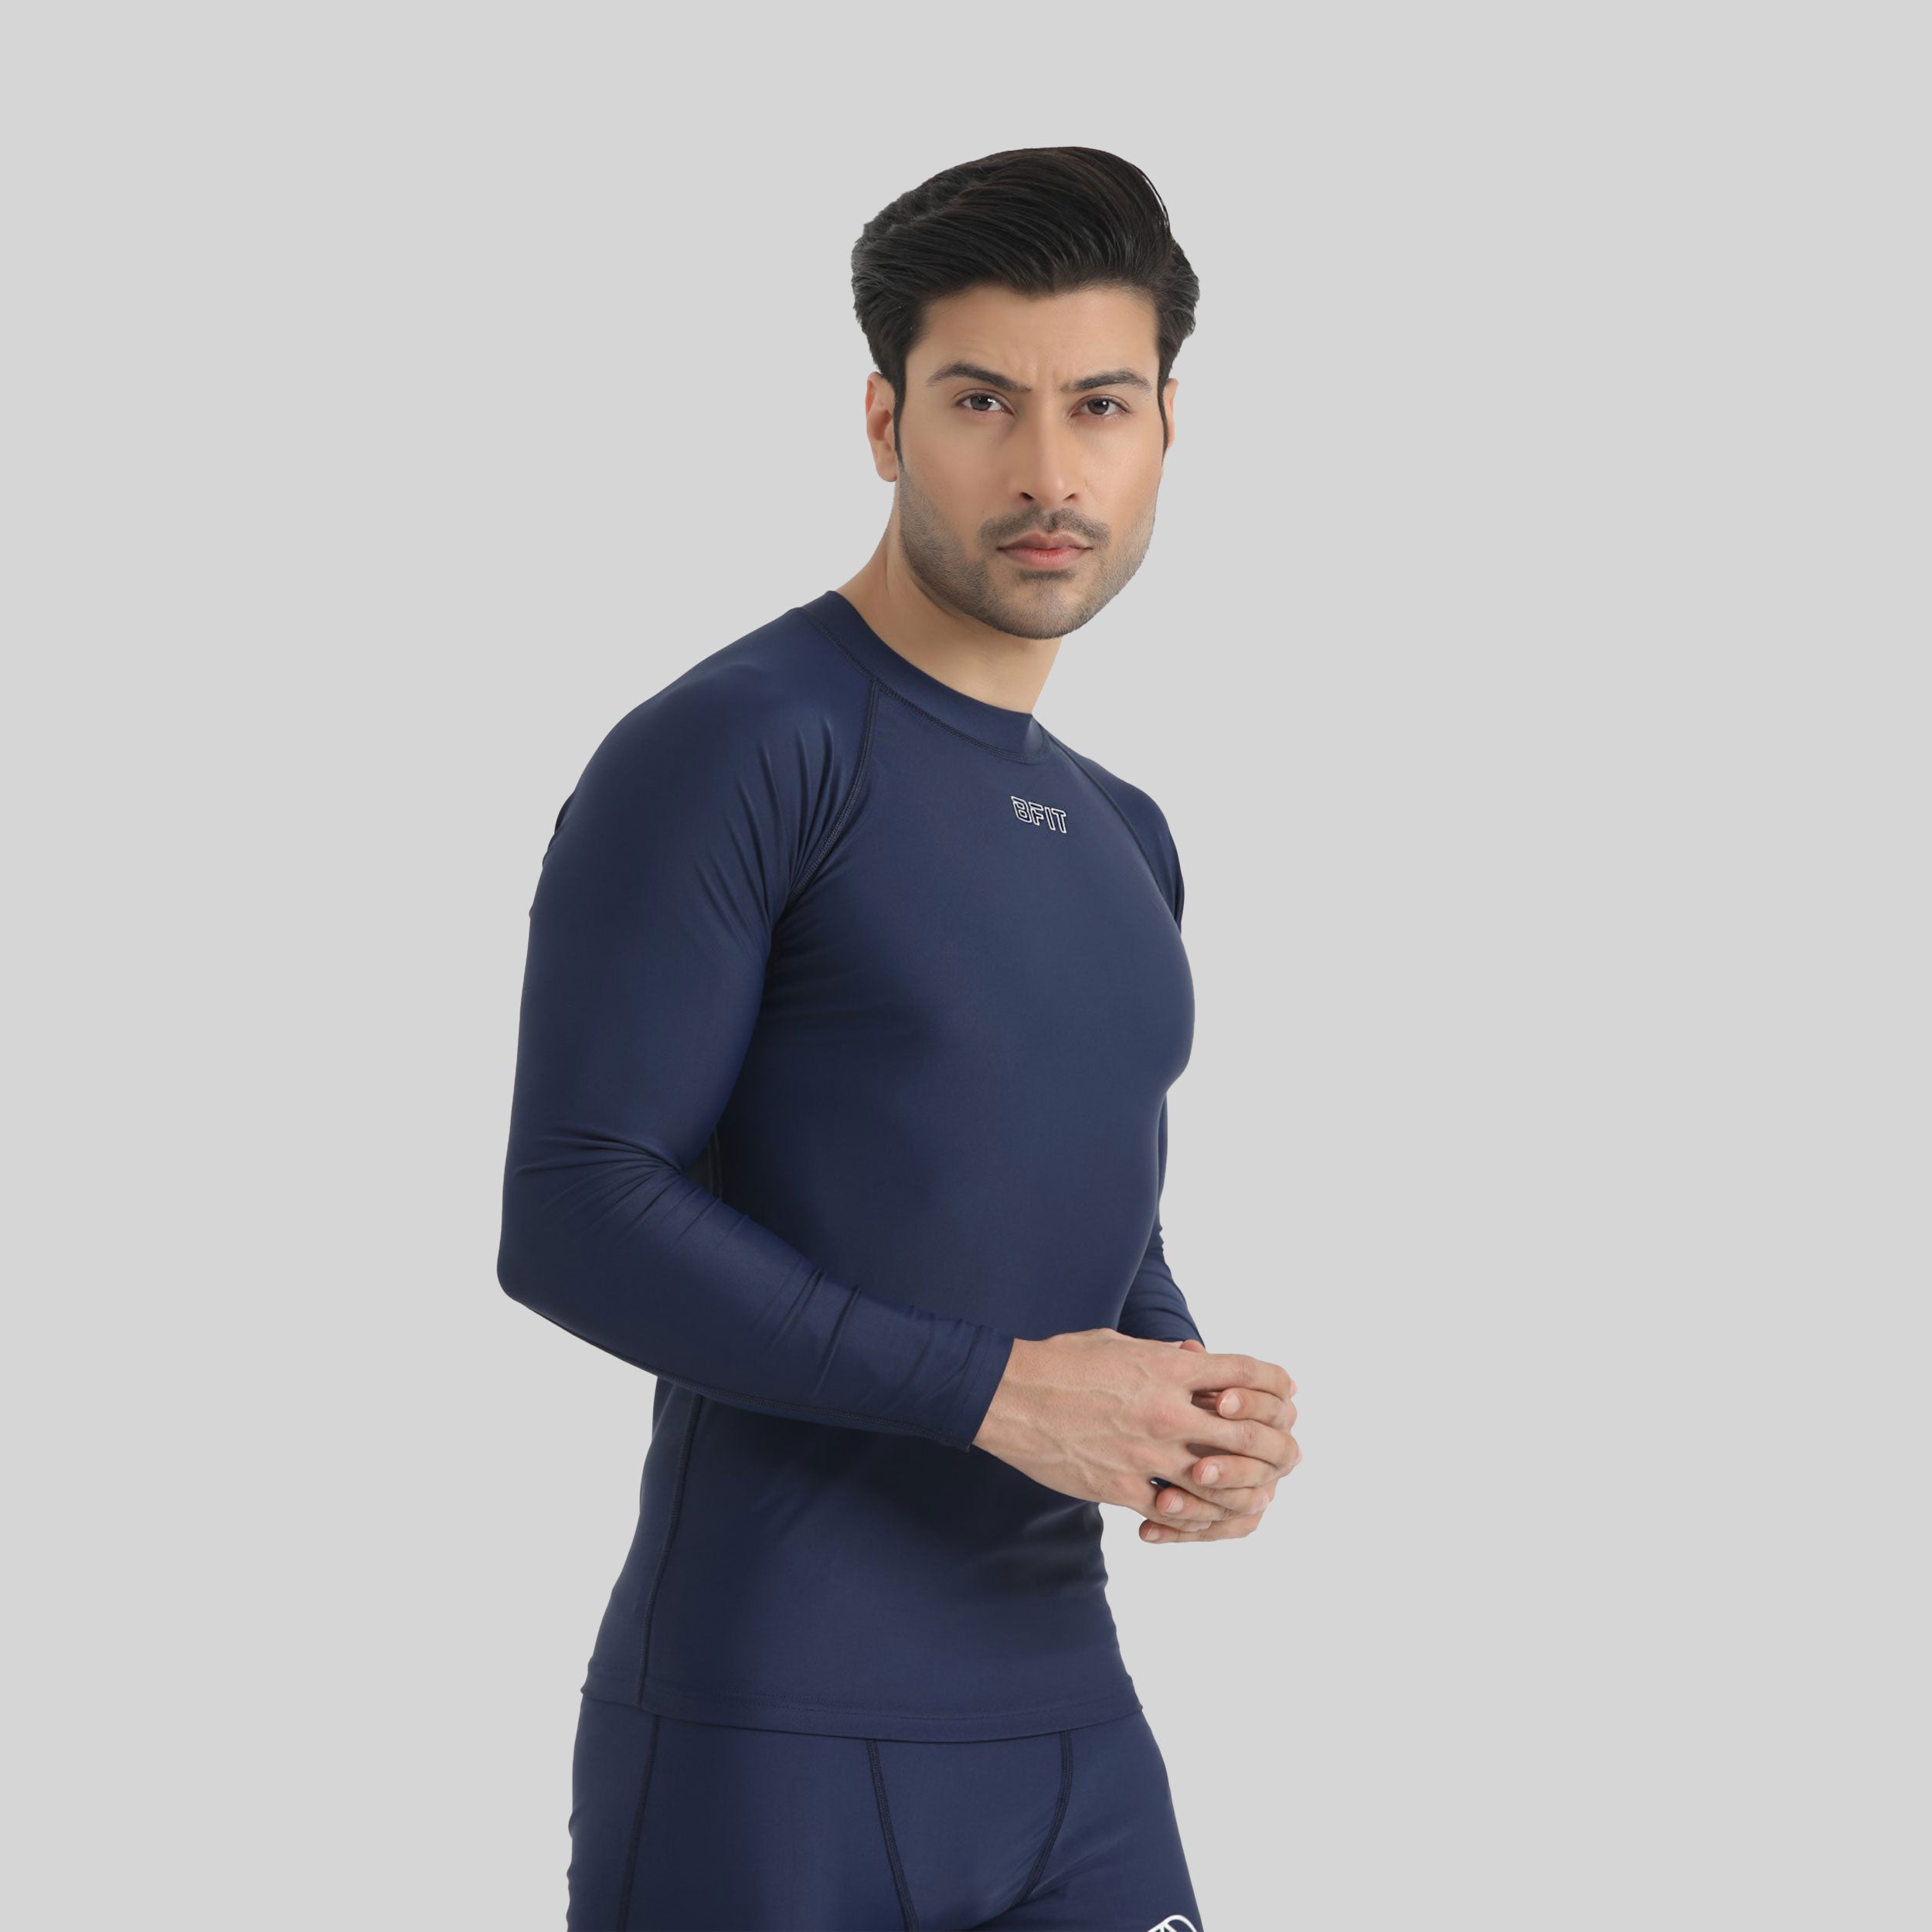 Men's Long Sleeve Compression Shirt